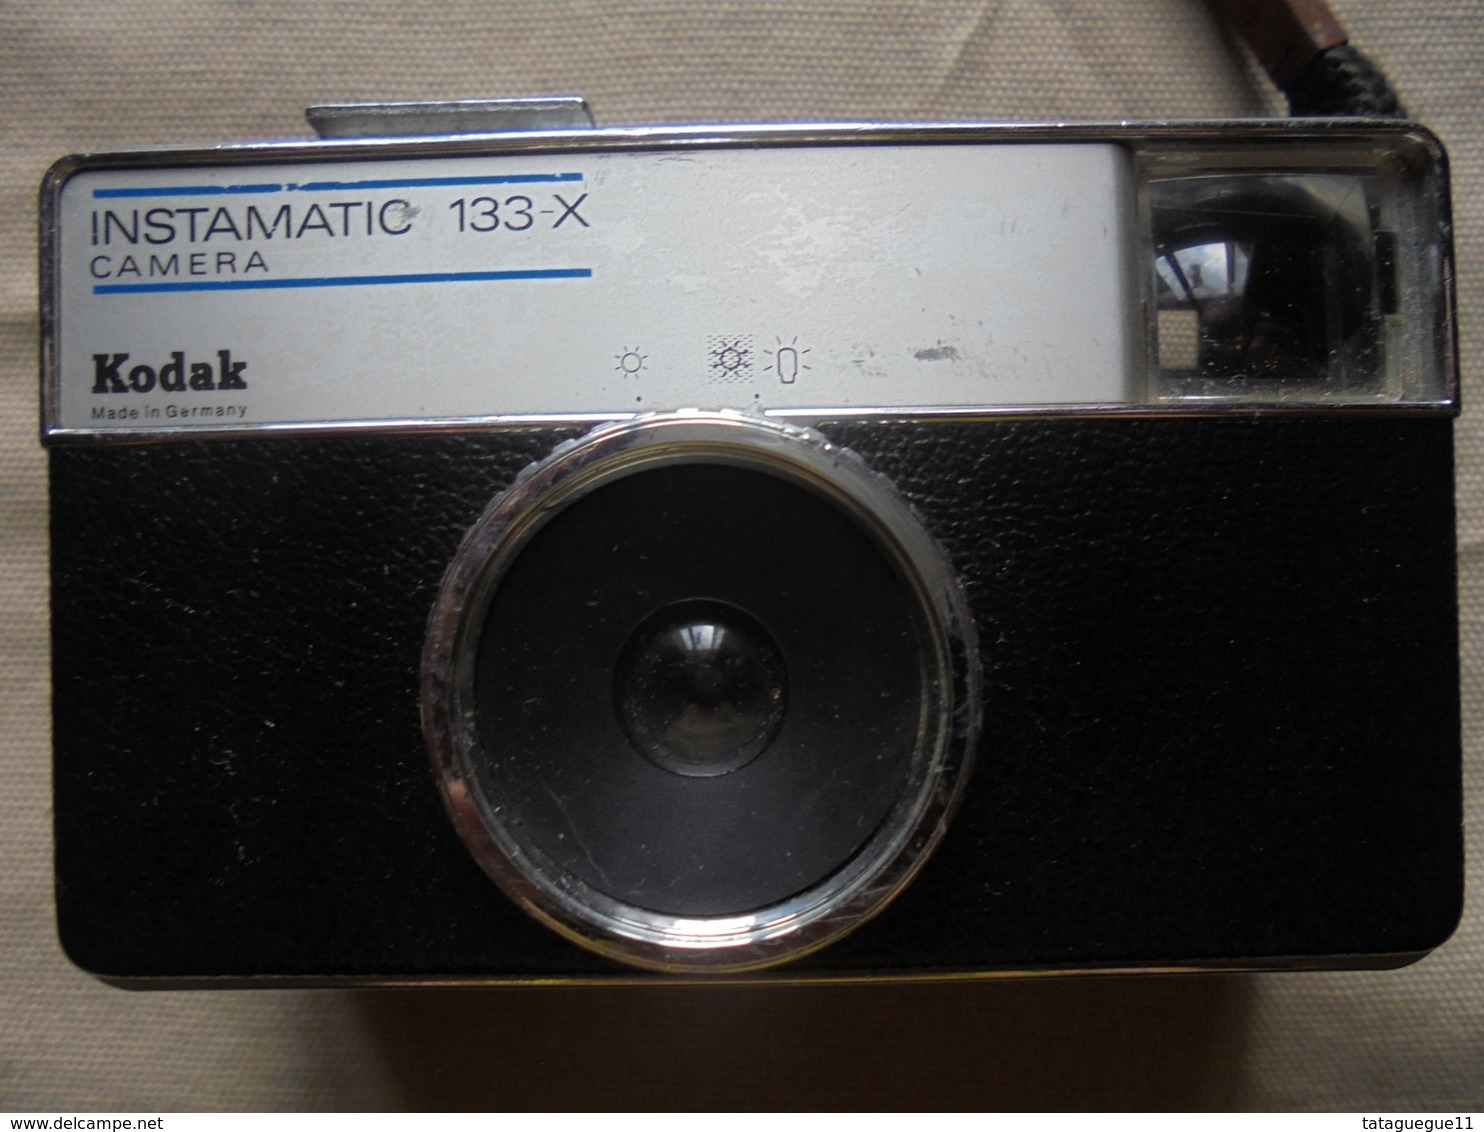 Vintage - Appareil Photo KODAK "INSTAMATIC 133-X" Made In Germany Années 60 - Appareils Photo